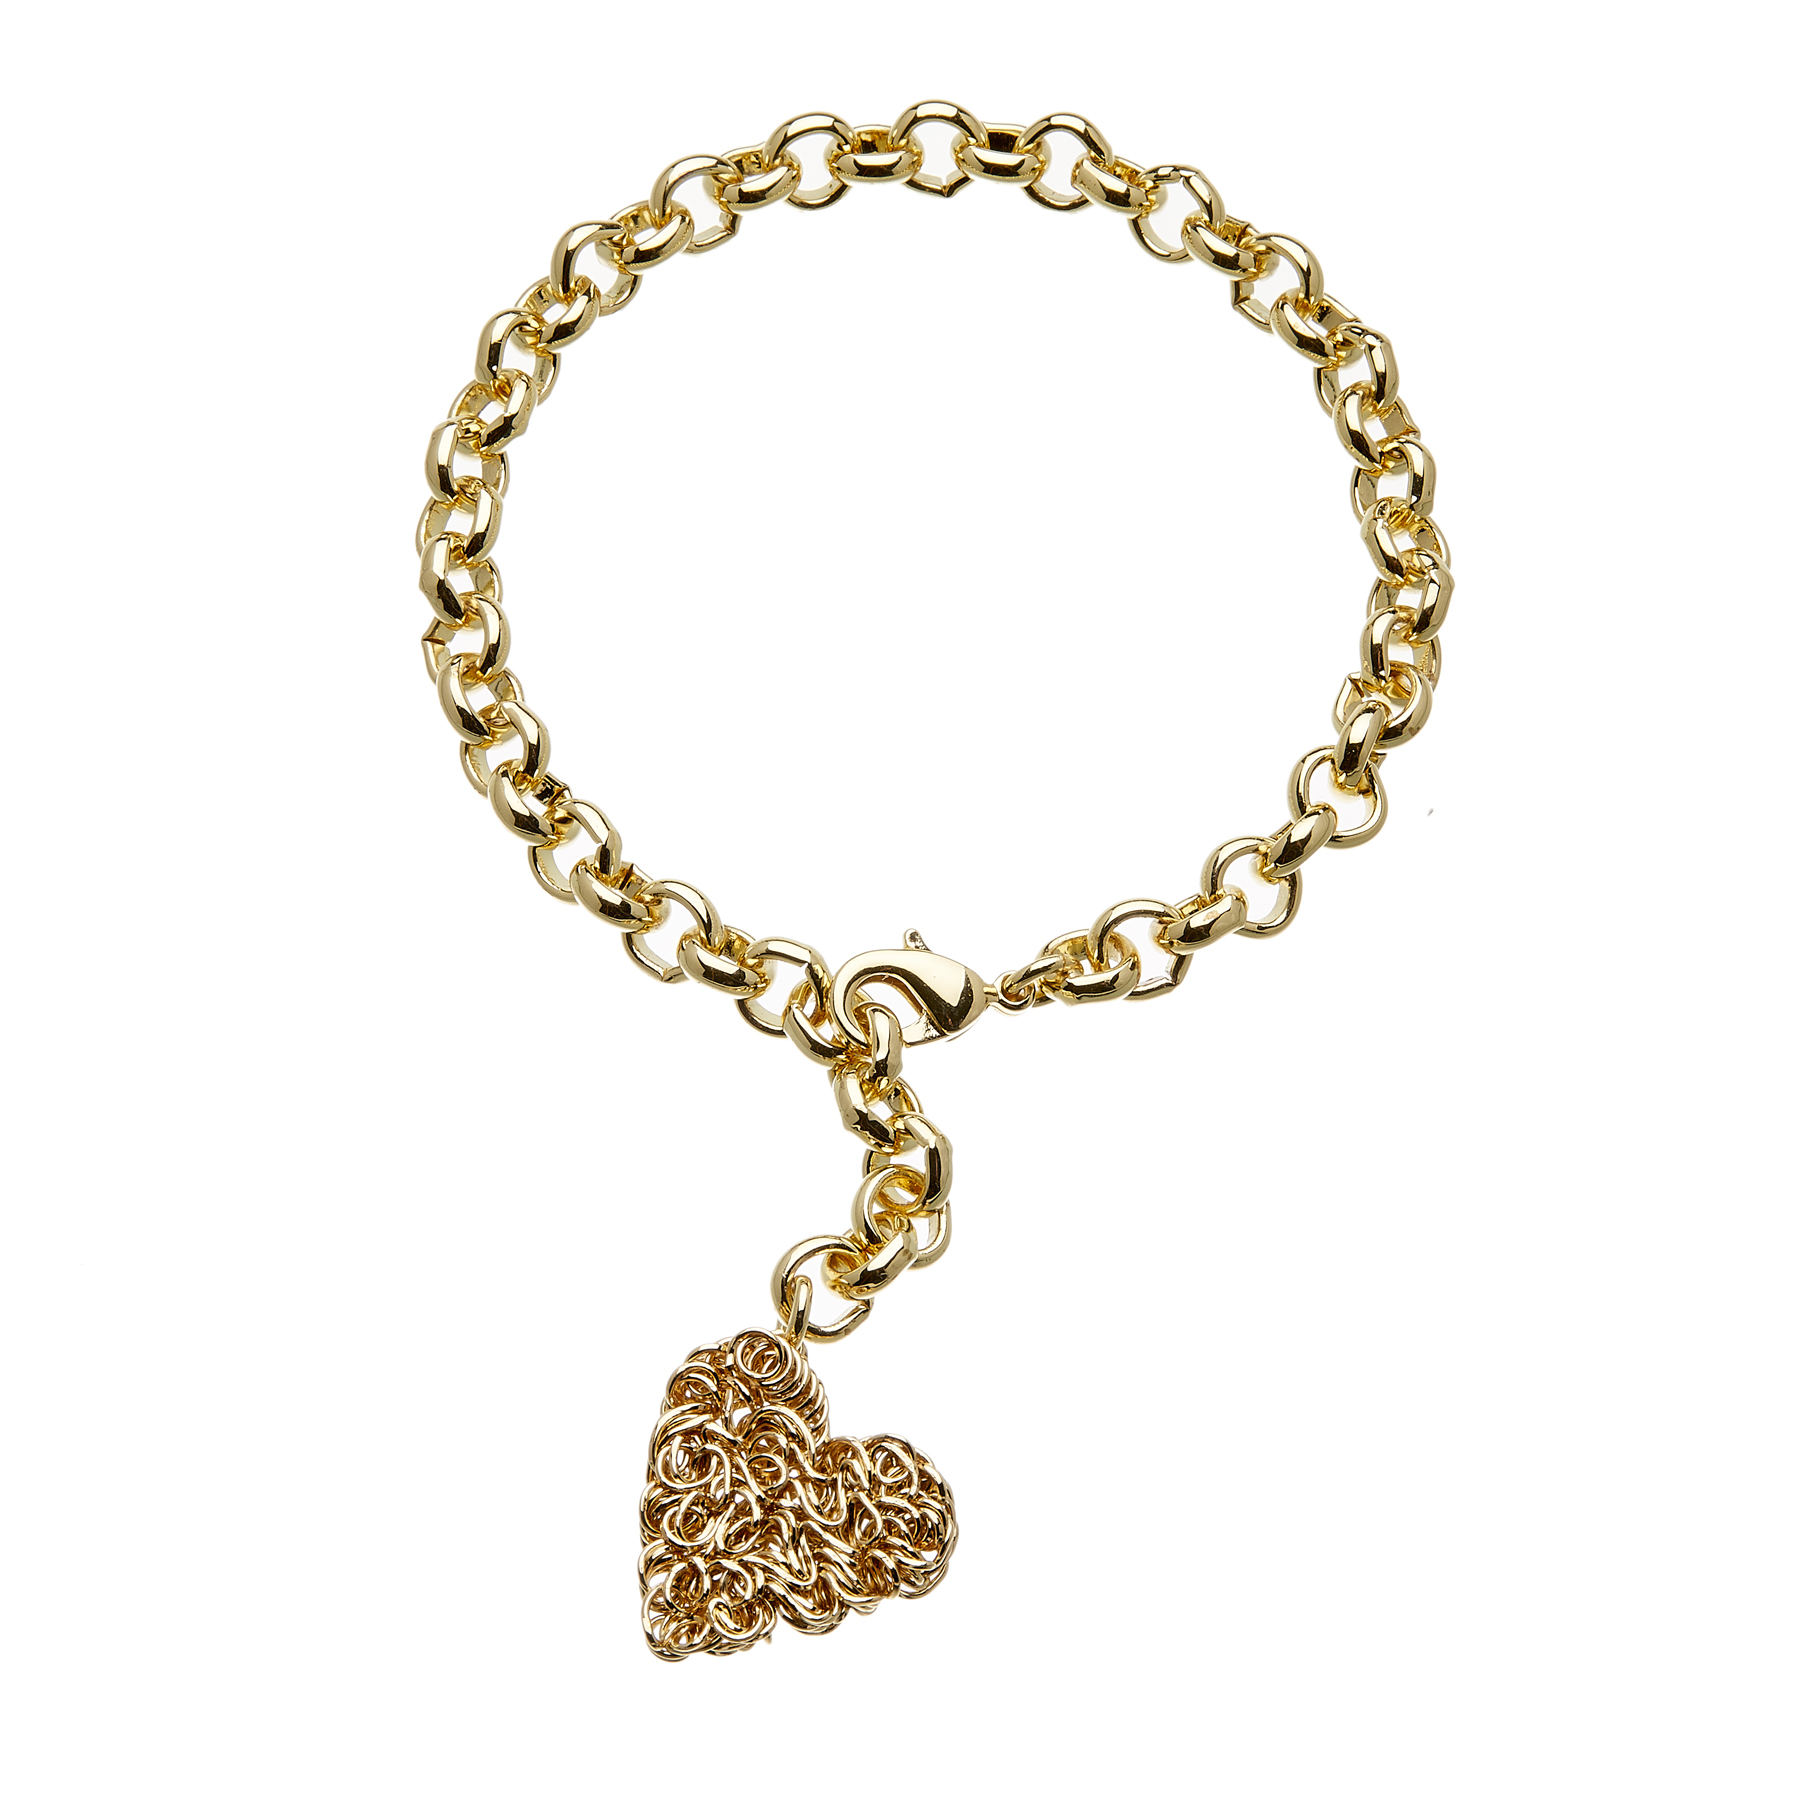 Gold heart tag charm Bracelet - Rowan G